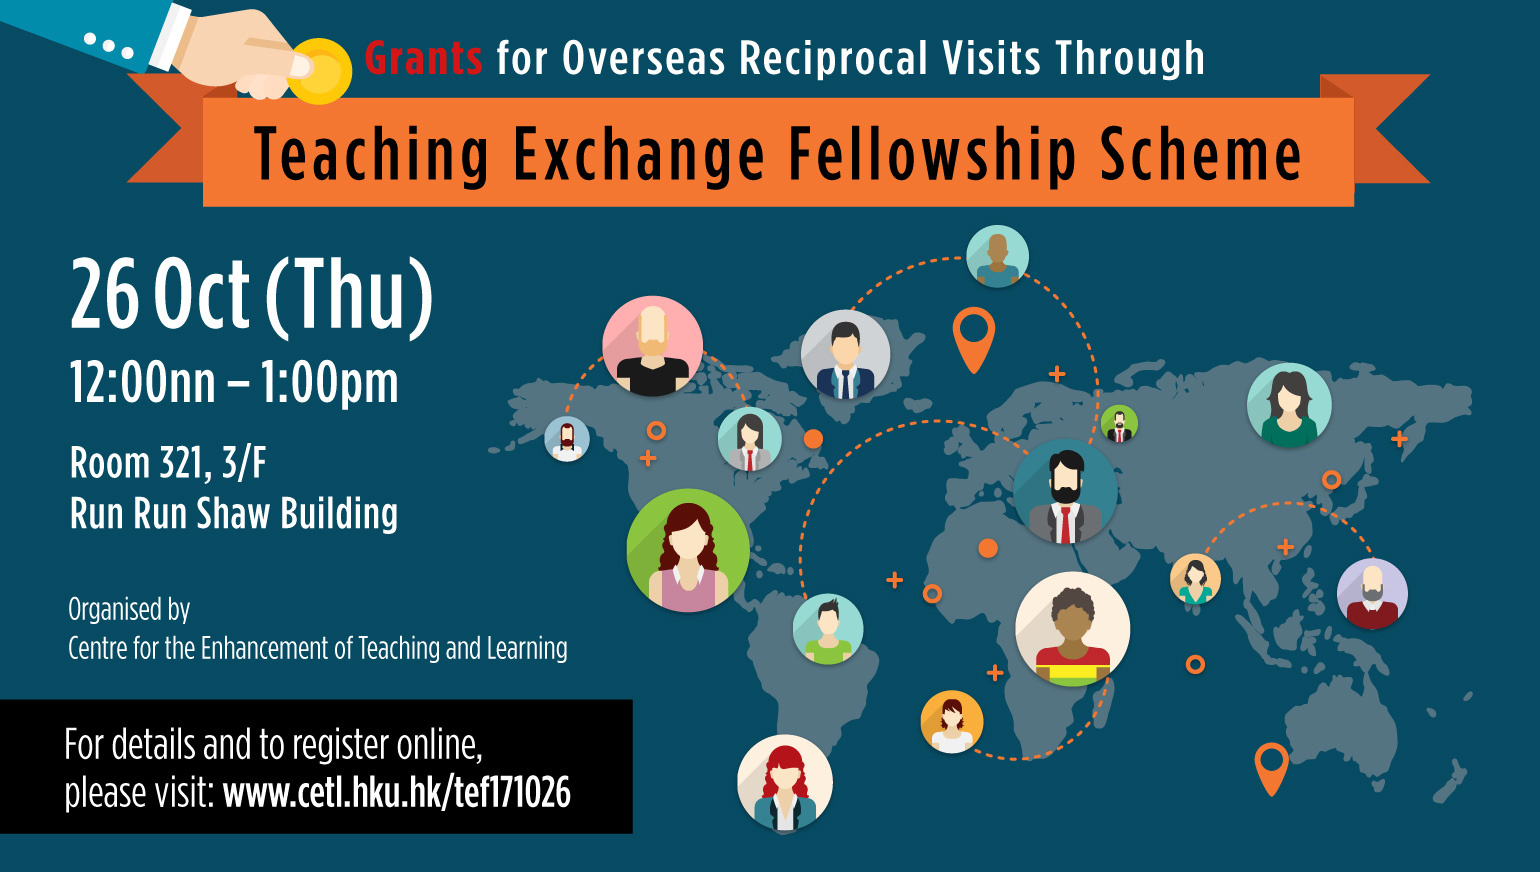 Teaching Exchange Fellowship Scheme Seminar (TEFS)